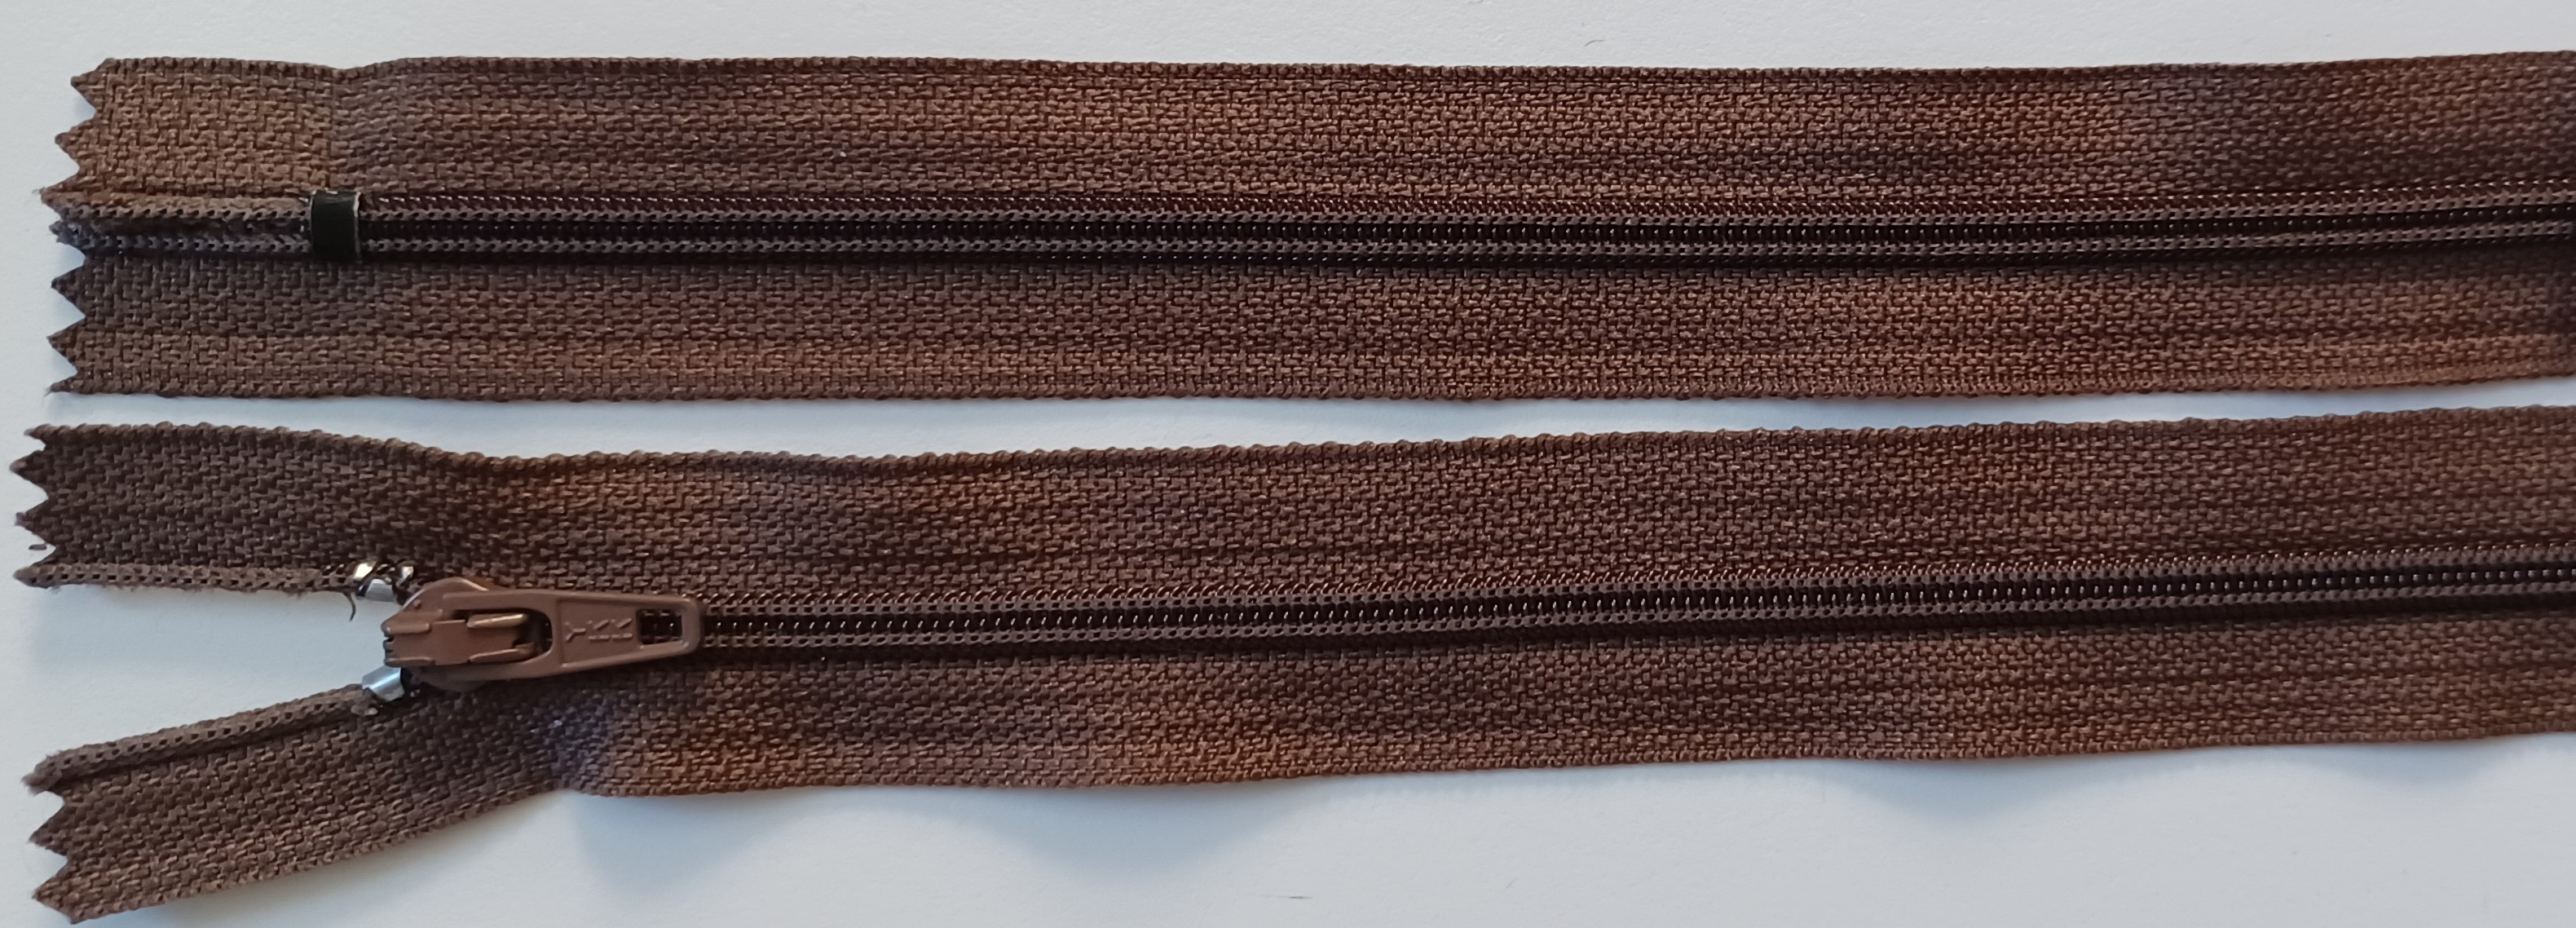 YKK 7" Brown Nylon Coil Zipper